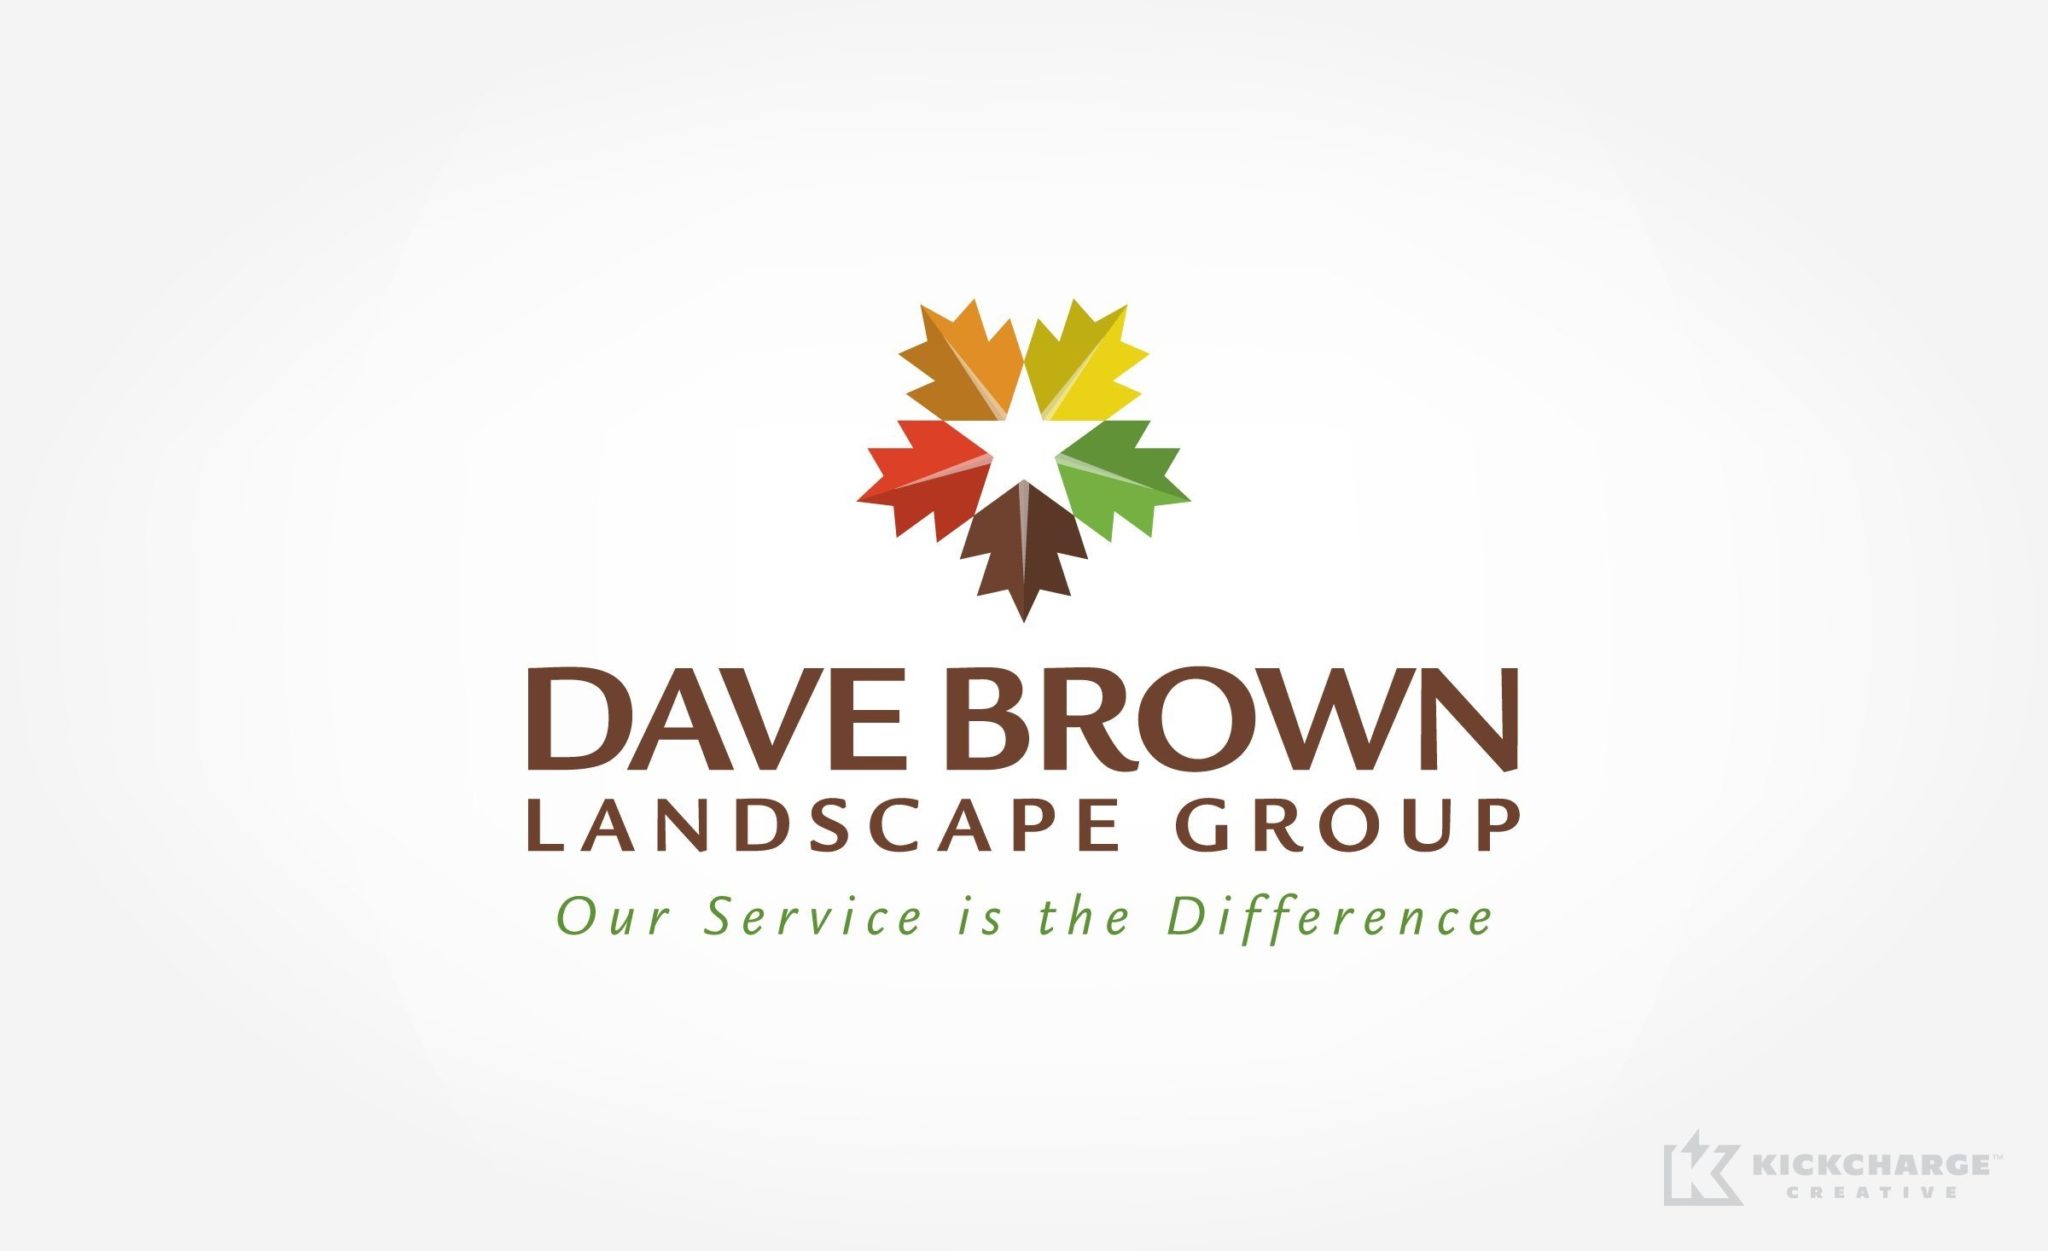 Dave Brown Landscape Group